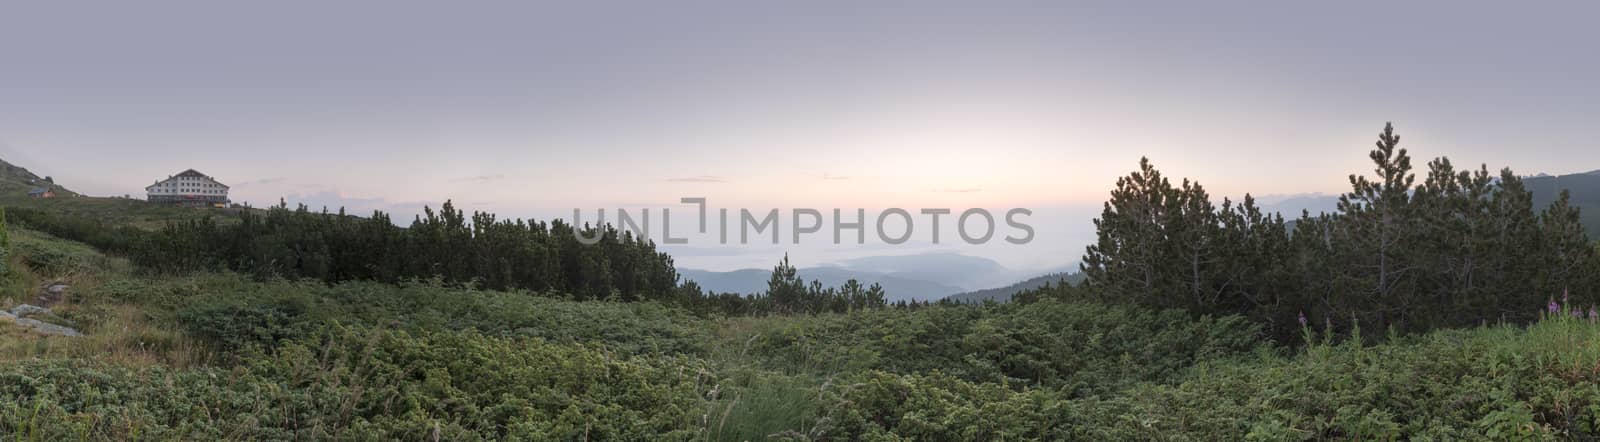 Sunrise in the mountain and hut. Panoramic image by deyan_georgiev